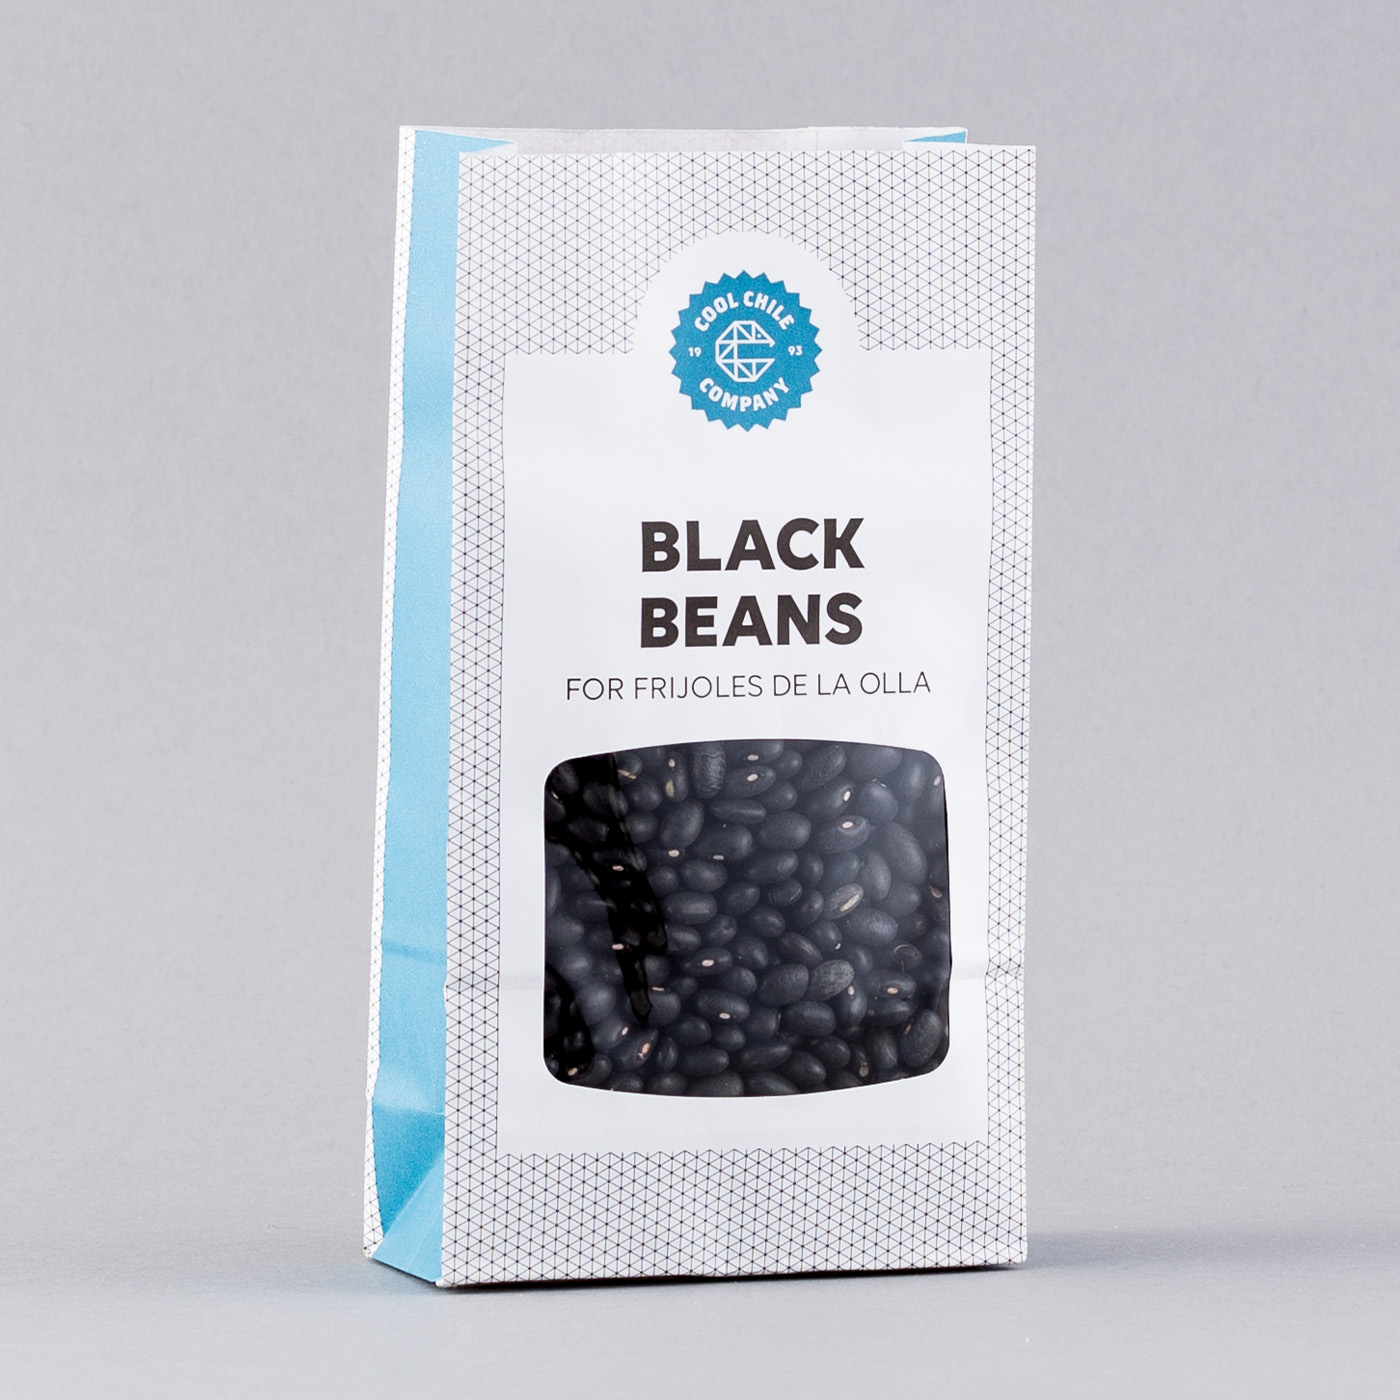 Black beans - product image